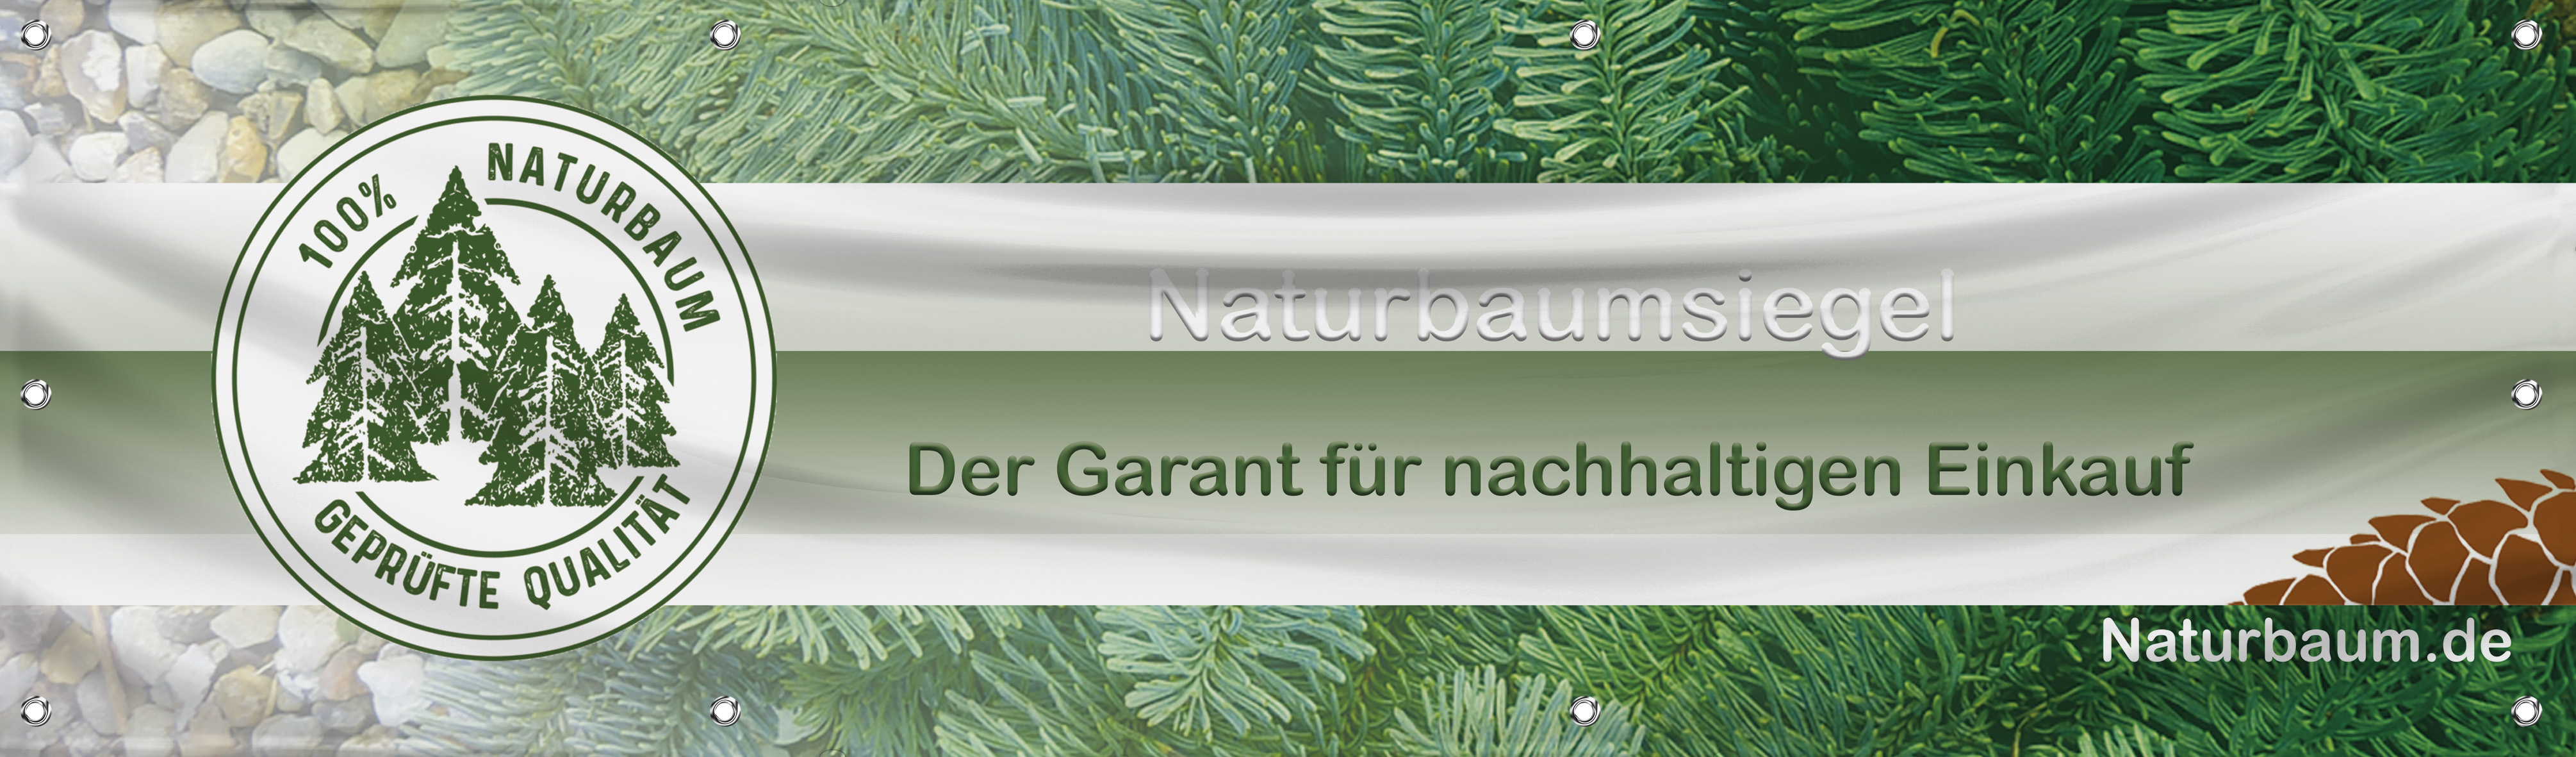 Banner natural tree - 300 x 83 cm, text: german